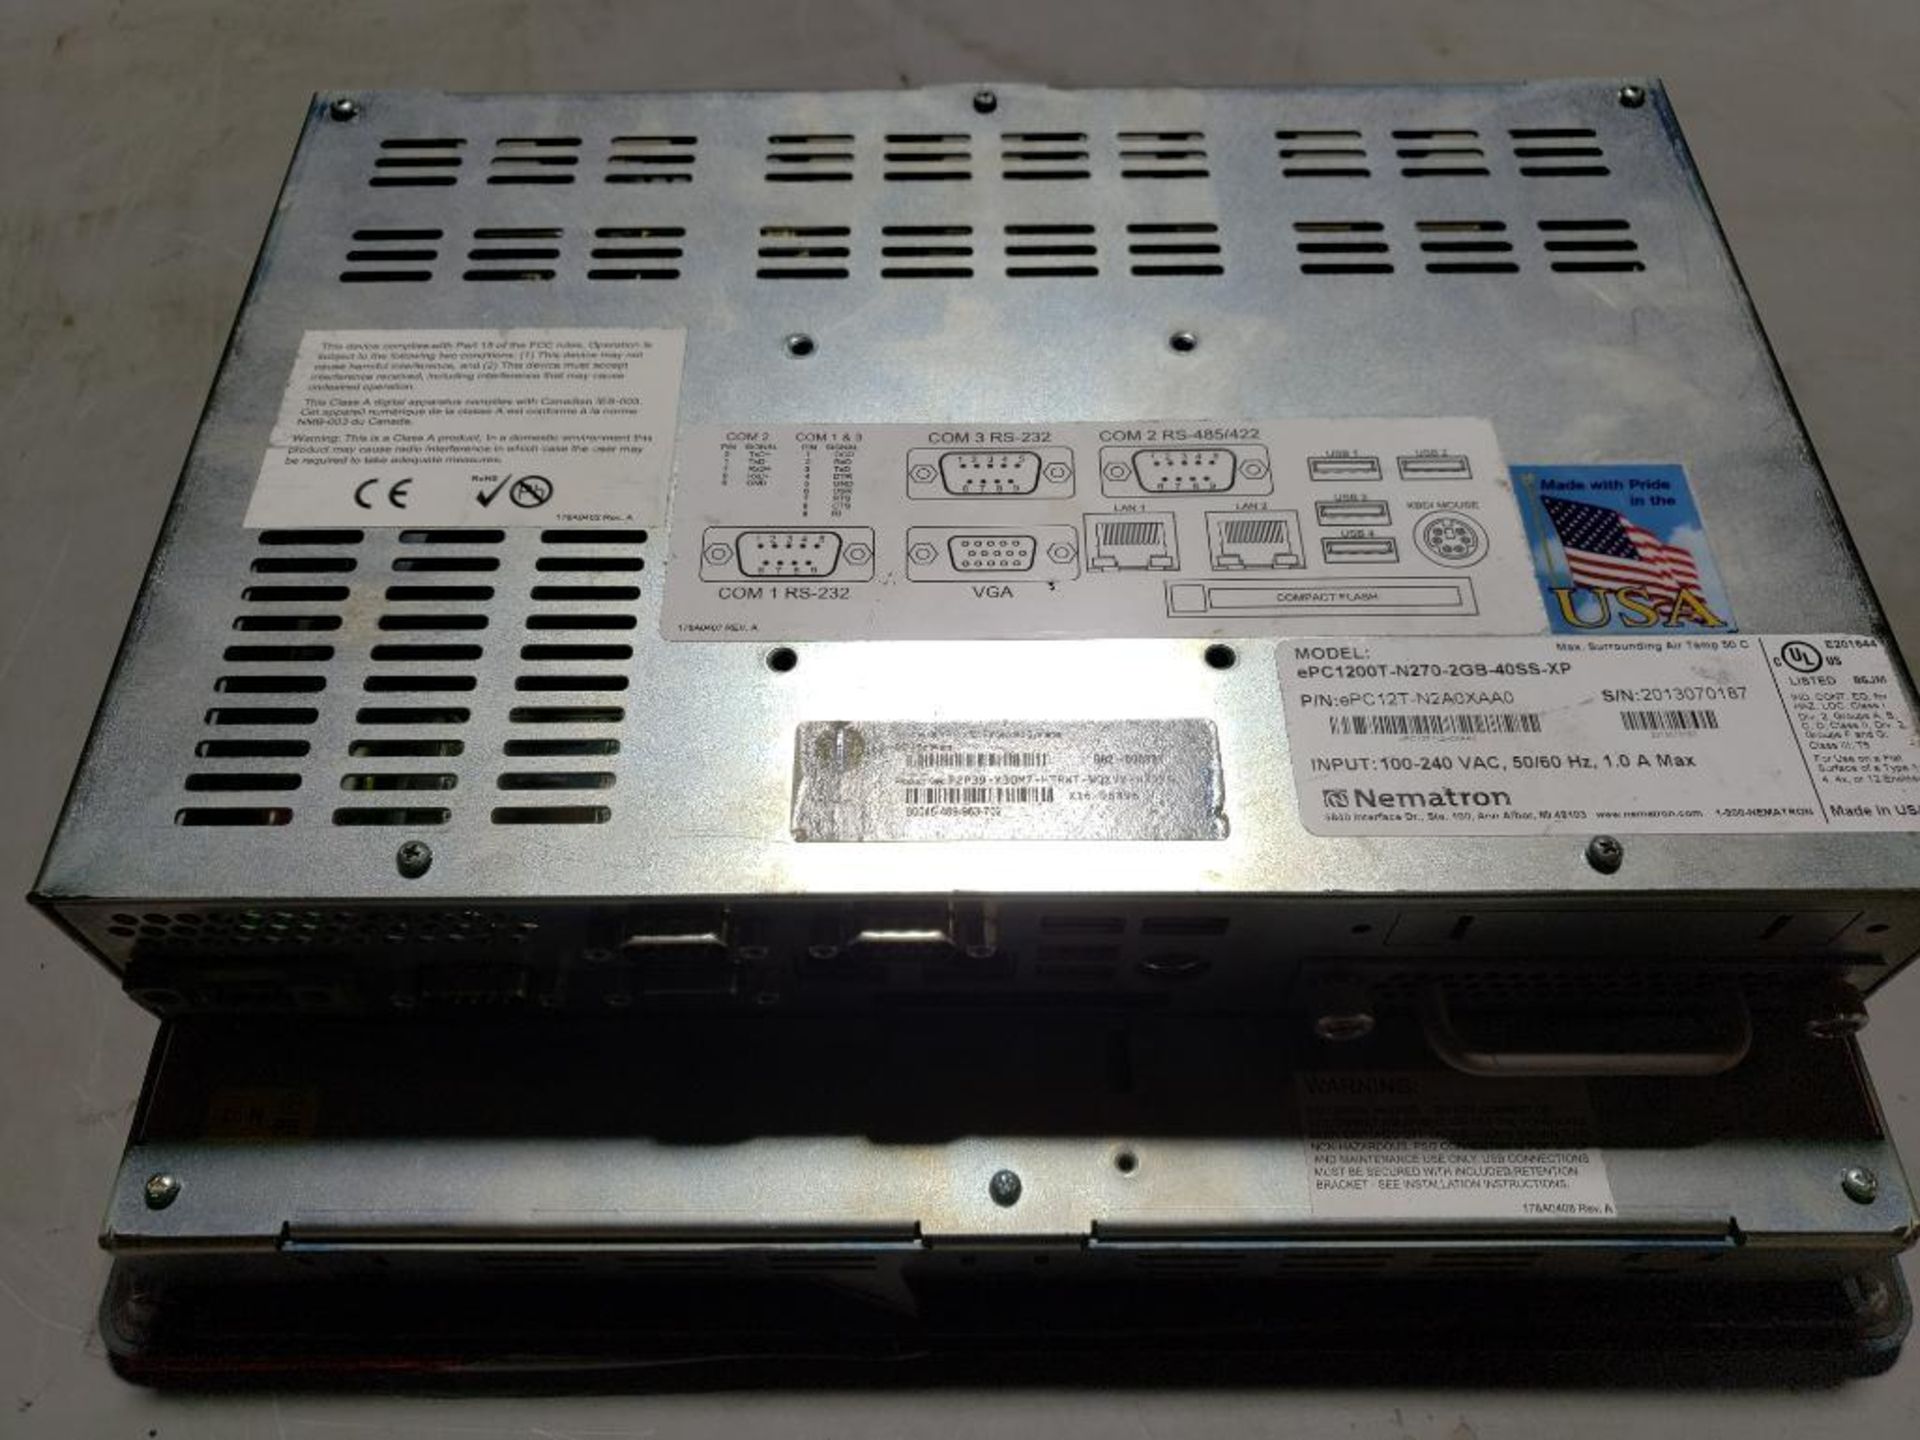 Nematron HMI industrial computer panel. Part number ePC12T-N2A0XAA0. - Image 6 of 6